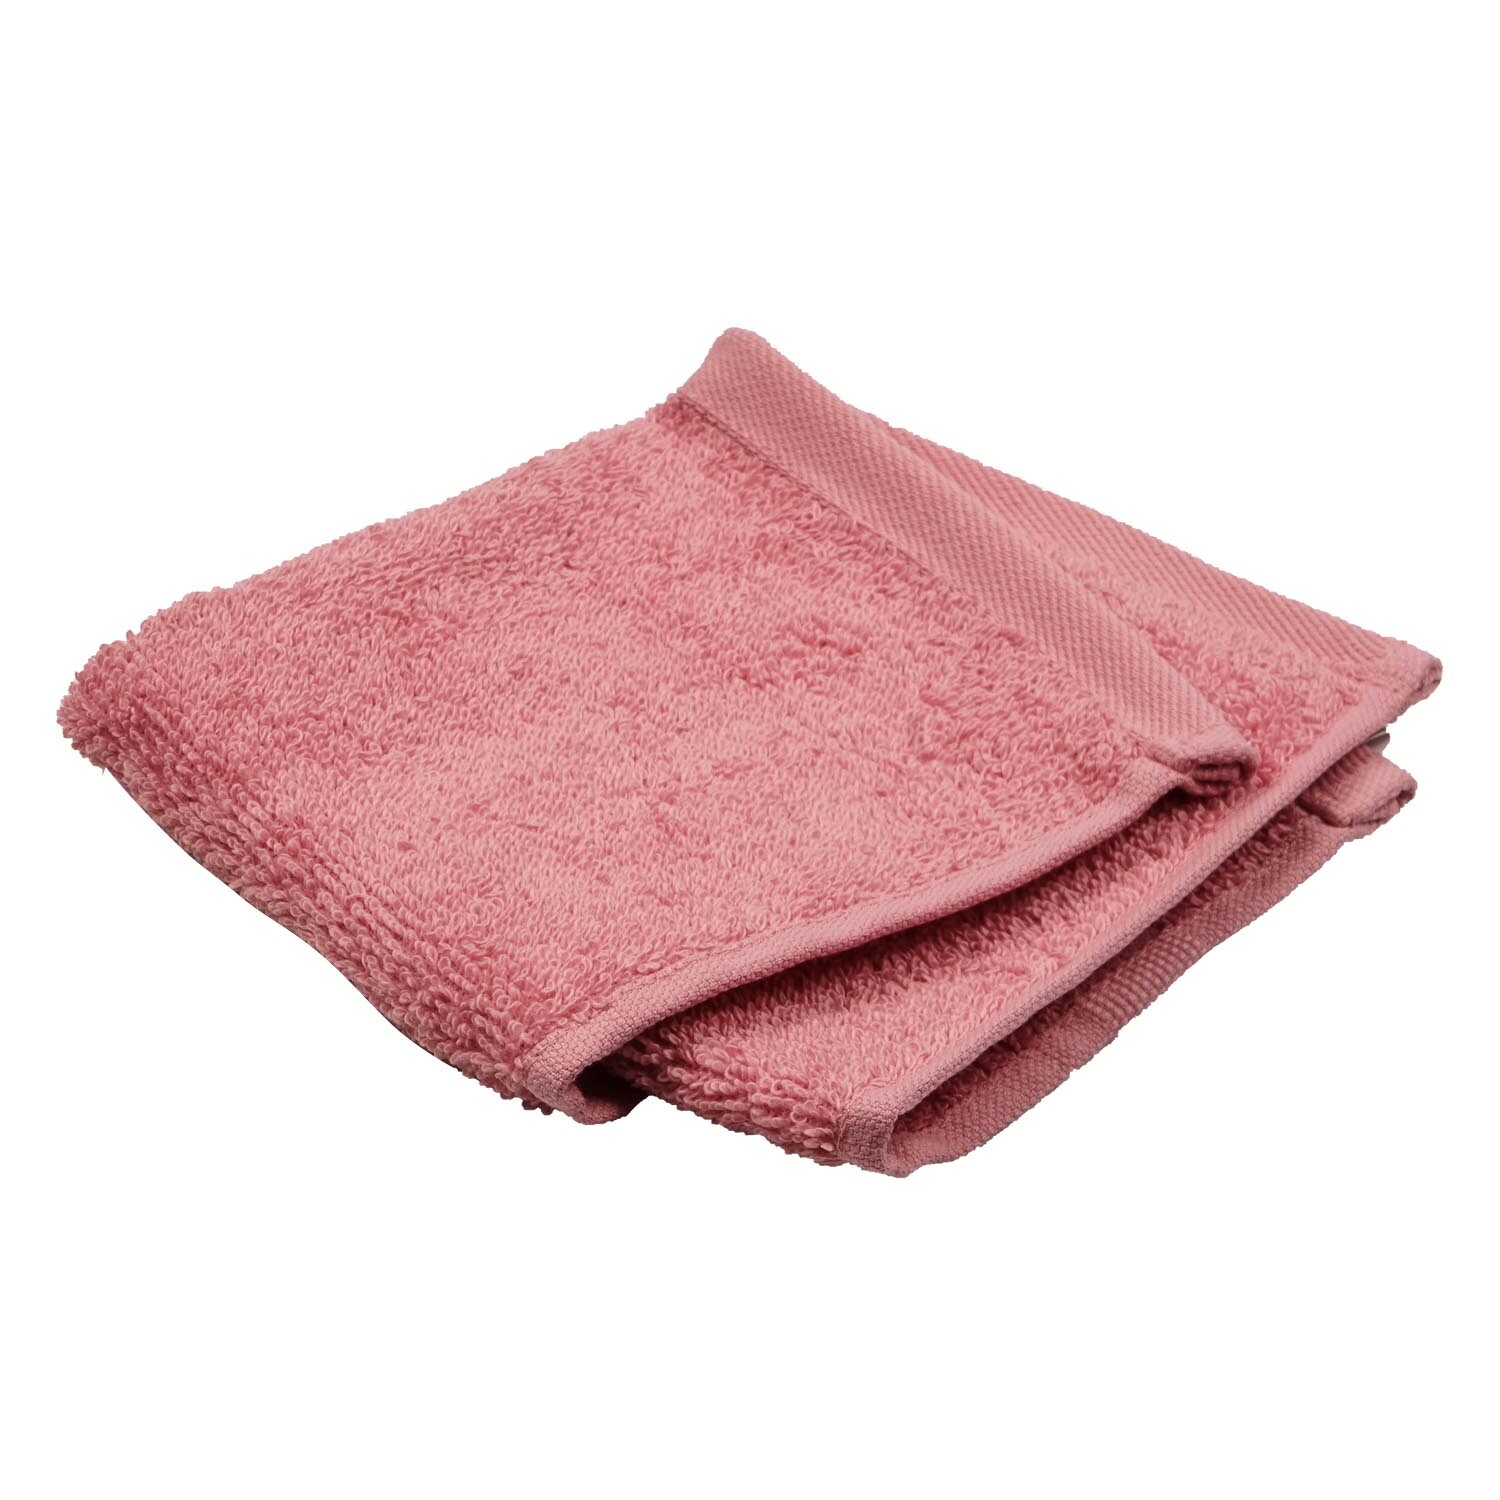 Divante Flannel Face Cloth - Rosa Image